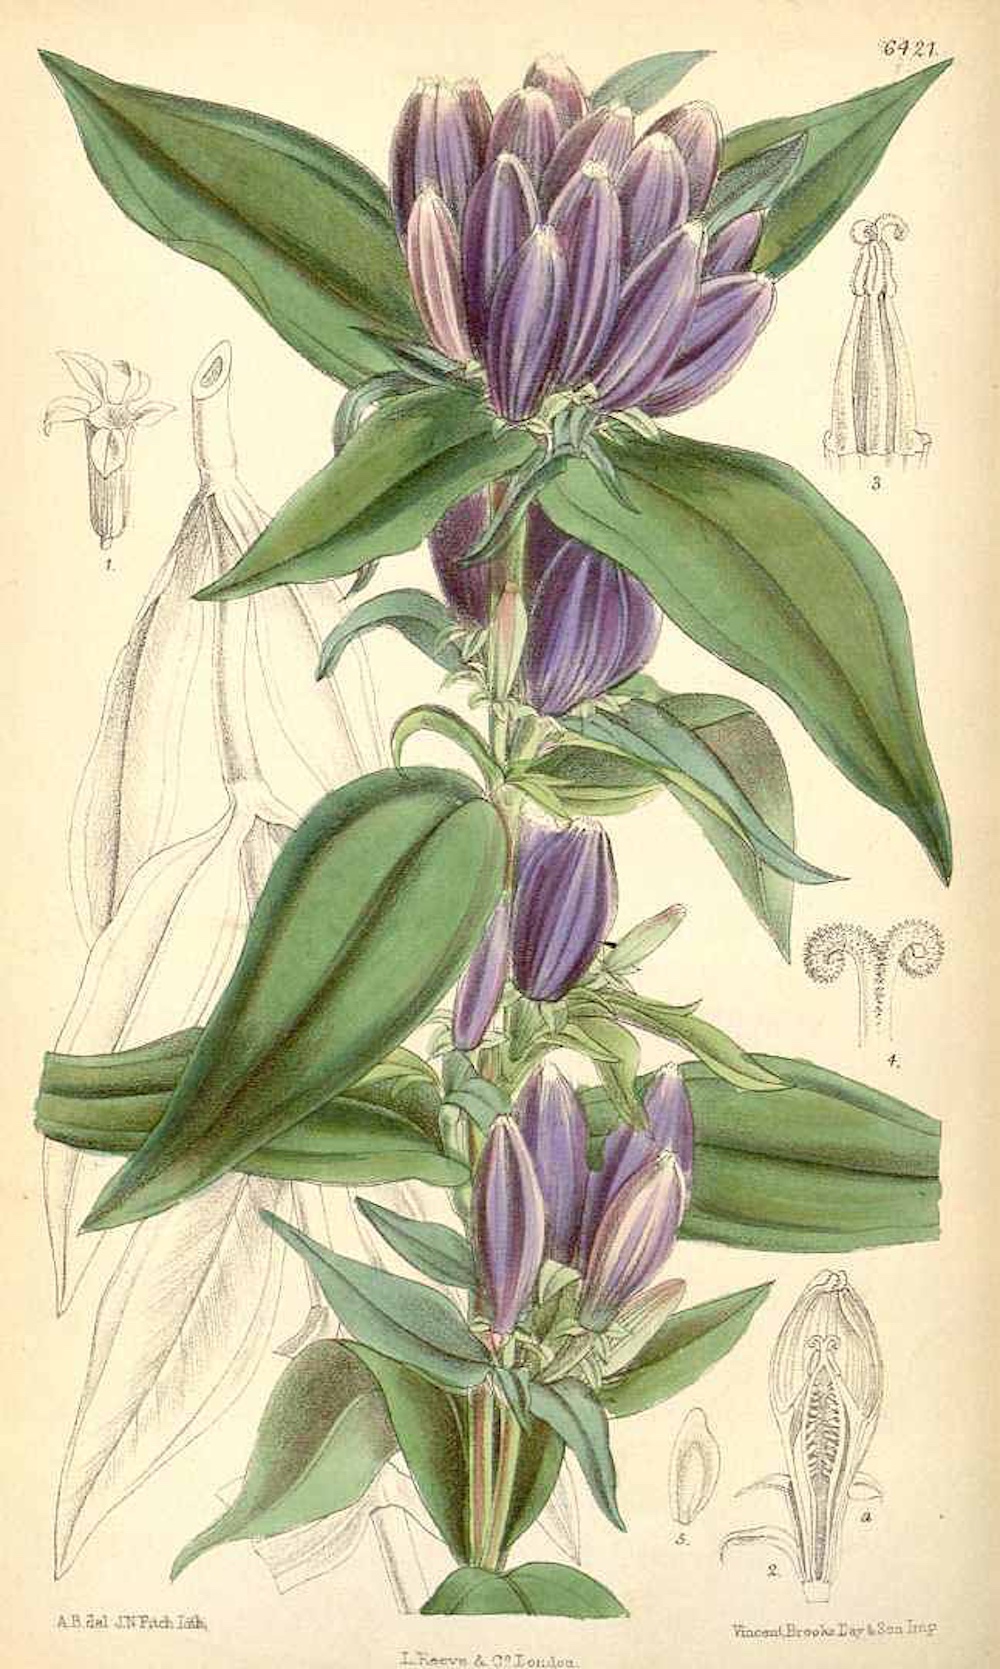 Closed Gentian botanical illustration circa 1879.